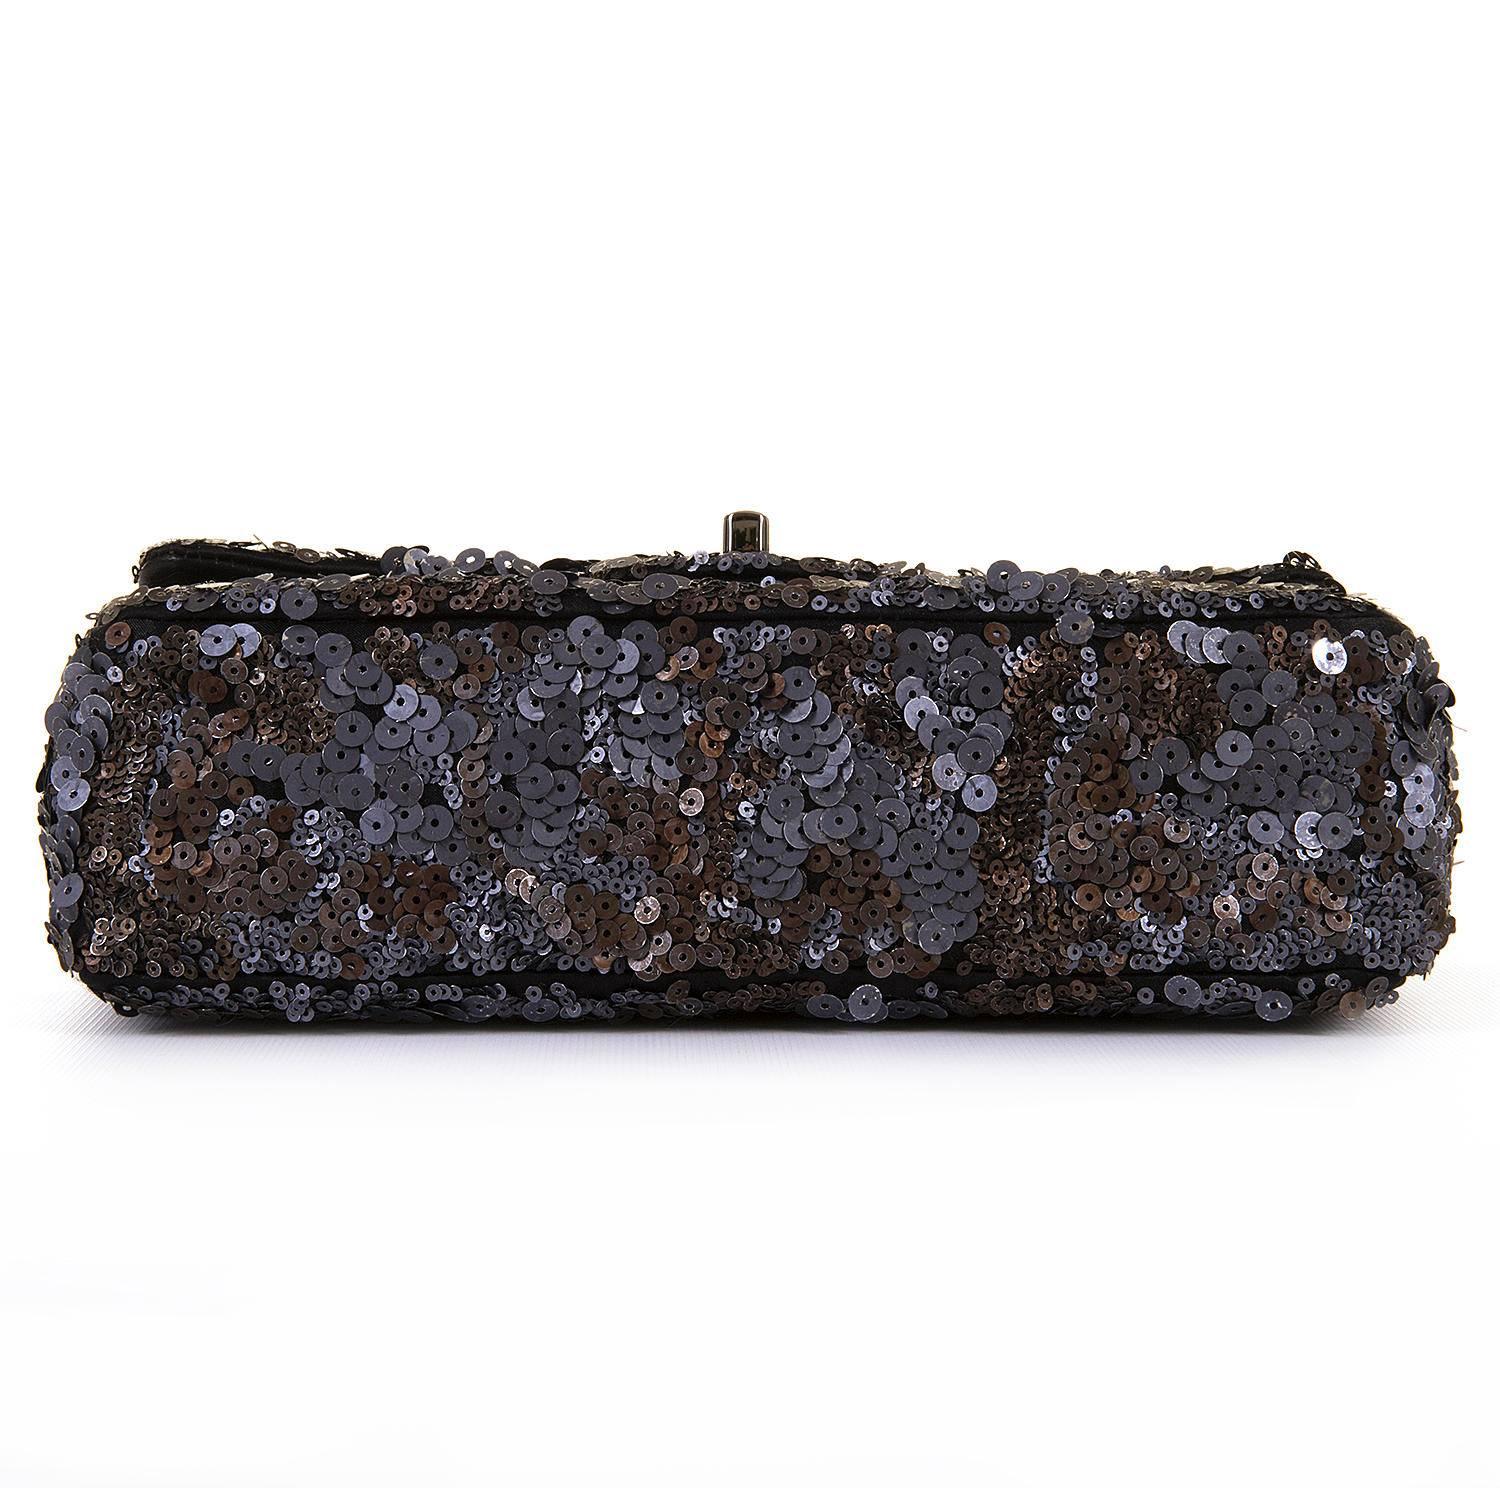 Black RUNWAY Chanel Hand-Embroidered 24cm 'Sac Classique' Medium Flap Shoulder Bag